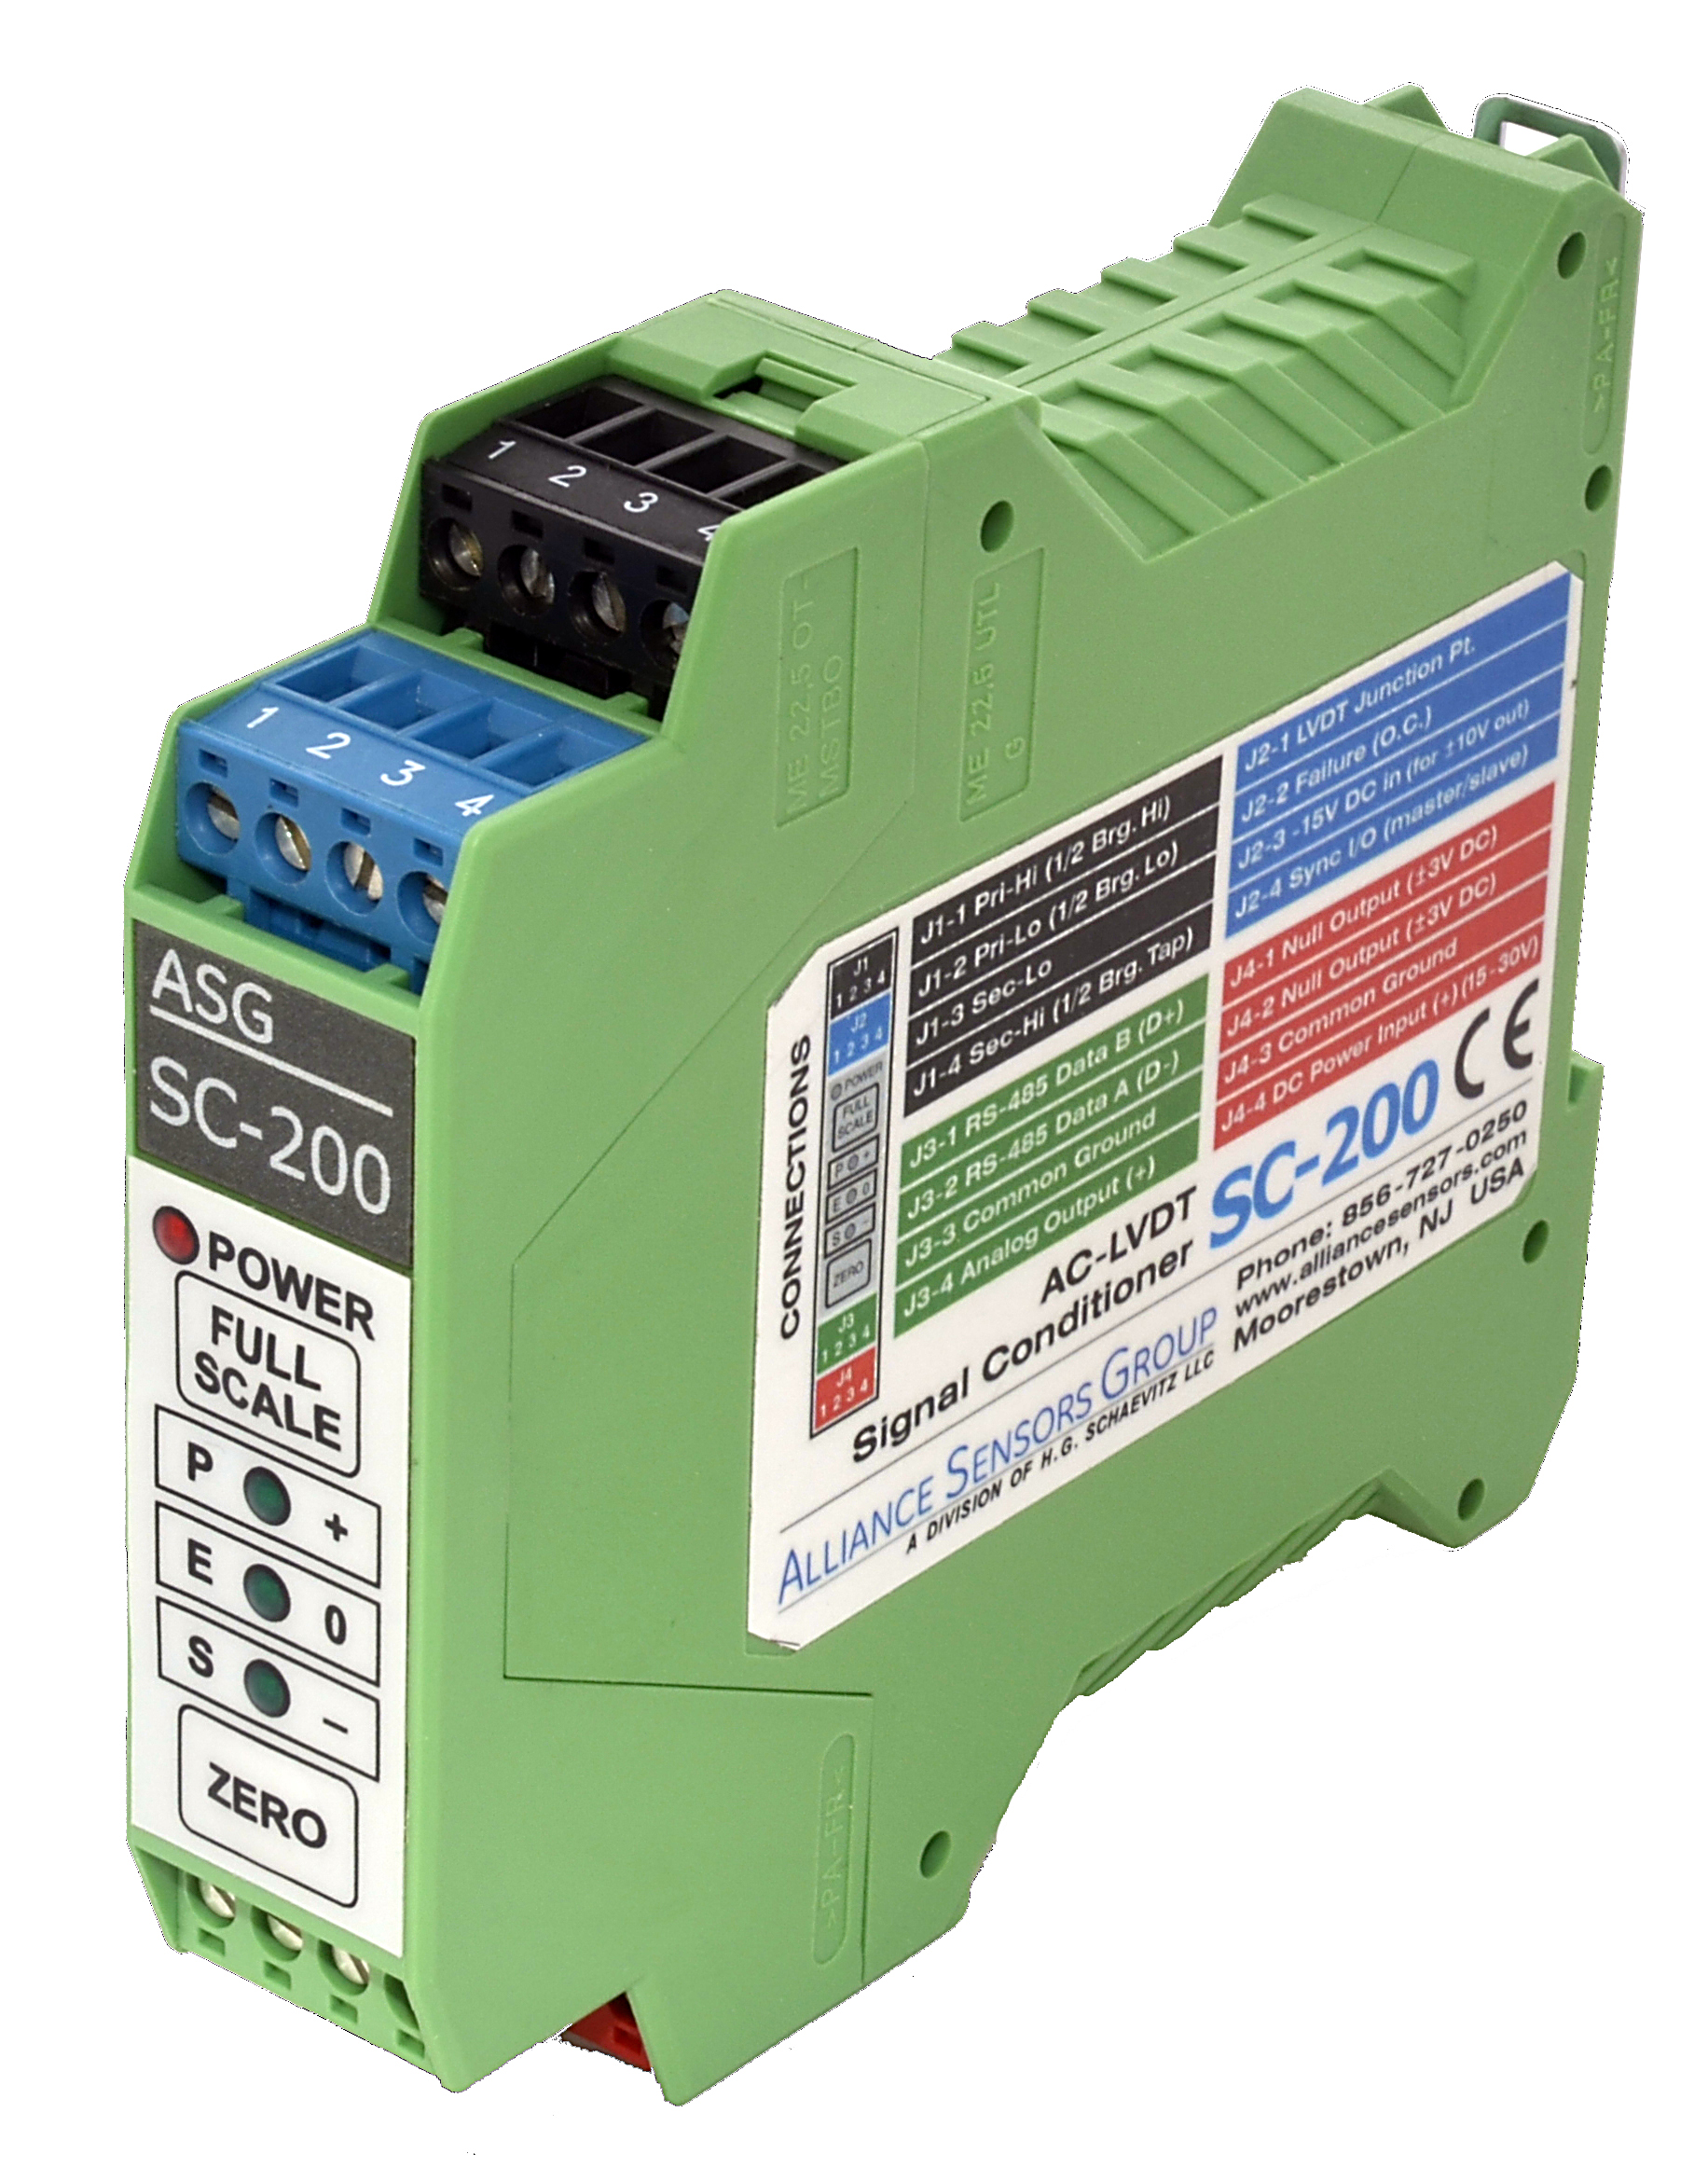 Alliance Sensors Groups SC-200 LVDT signal conditioner 